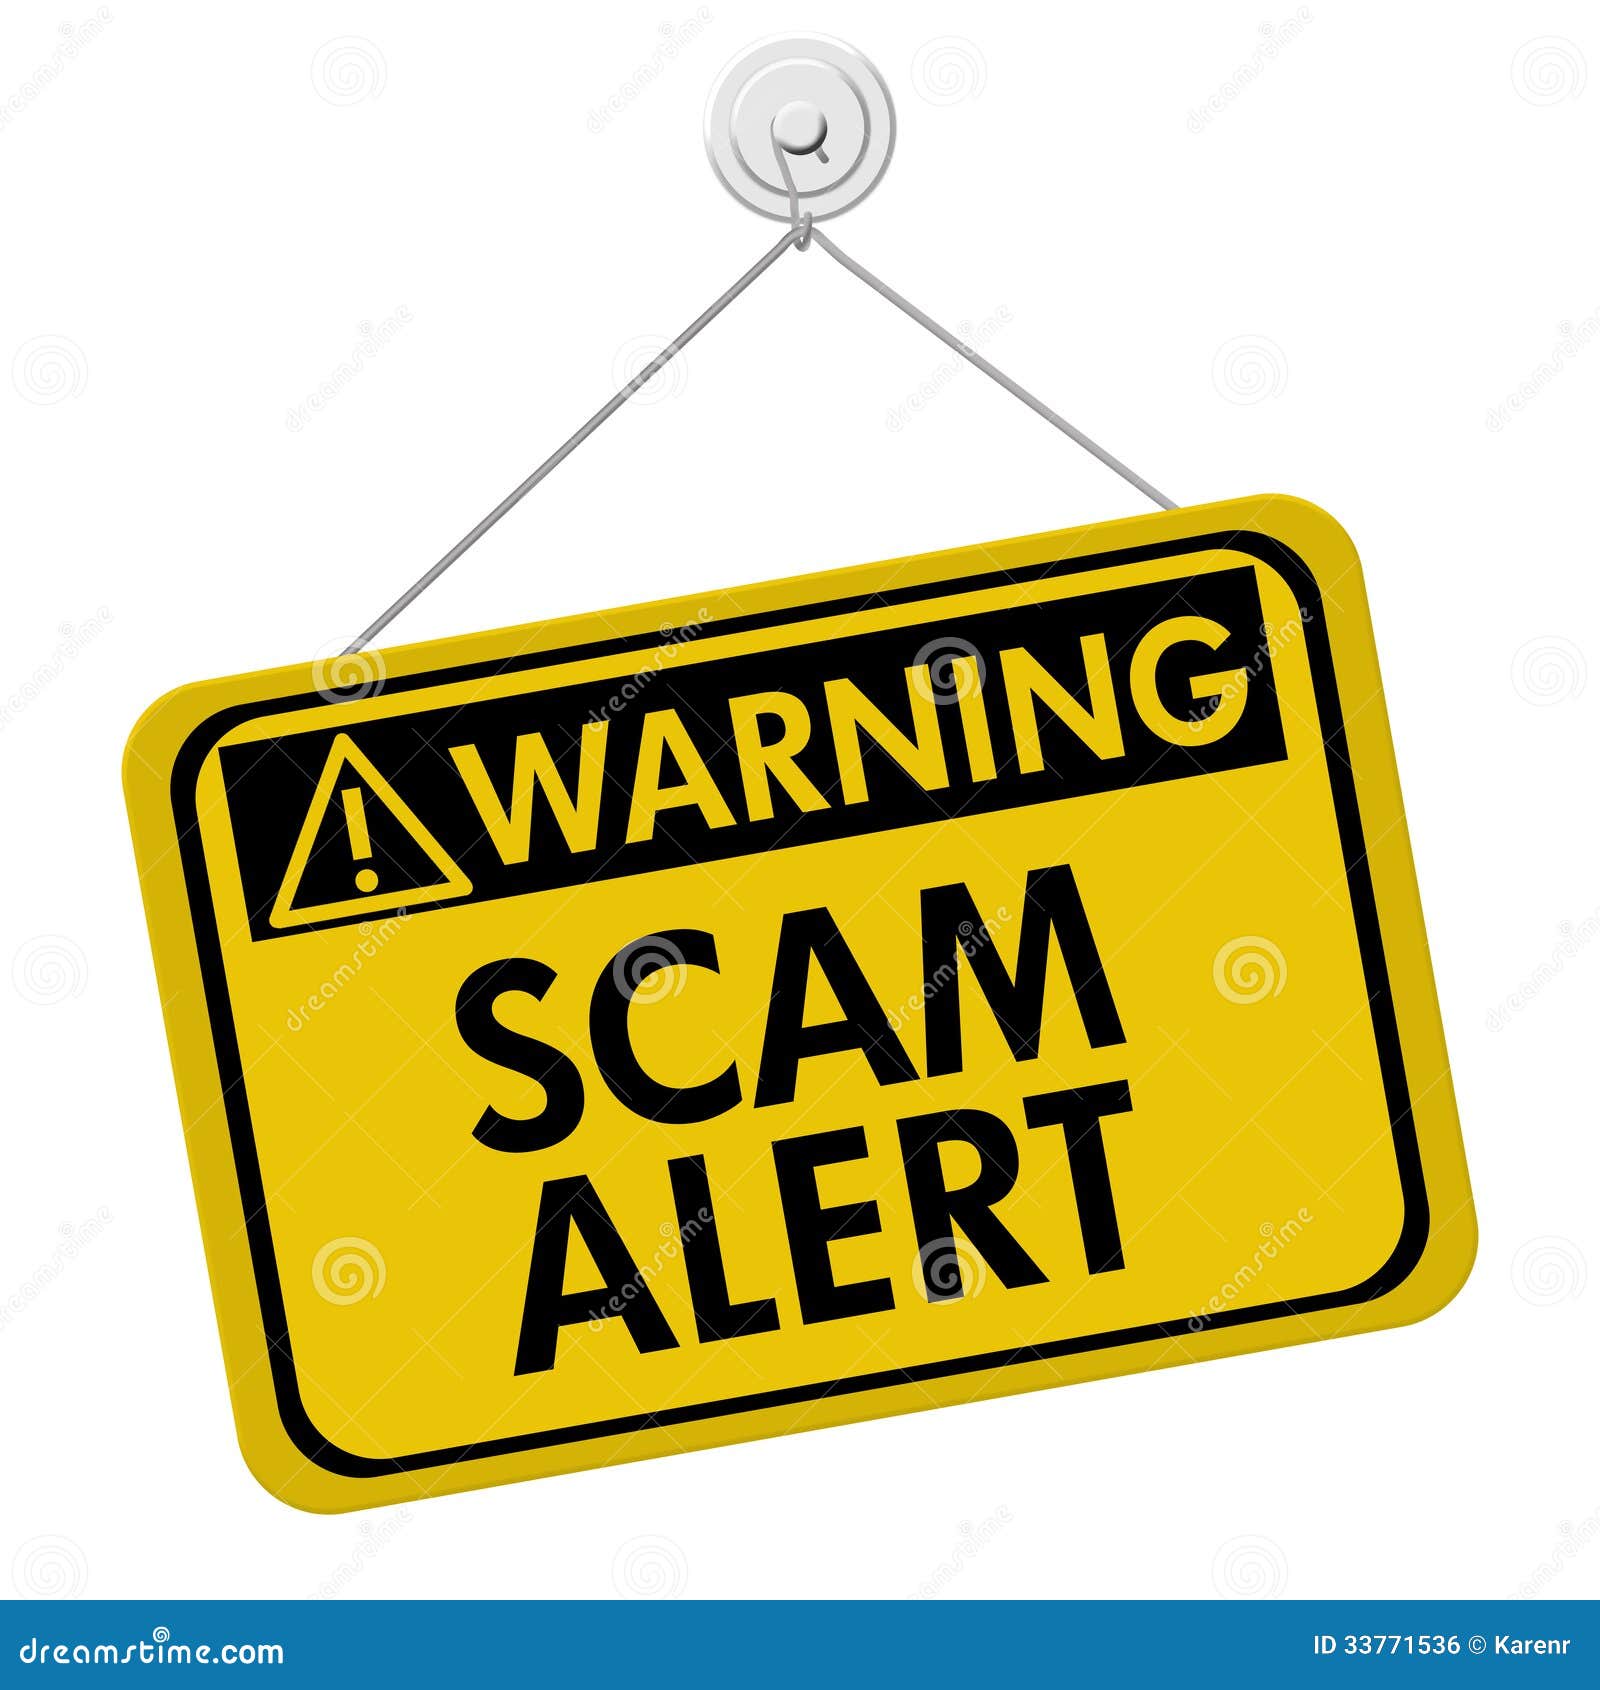 warning of scam alert